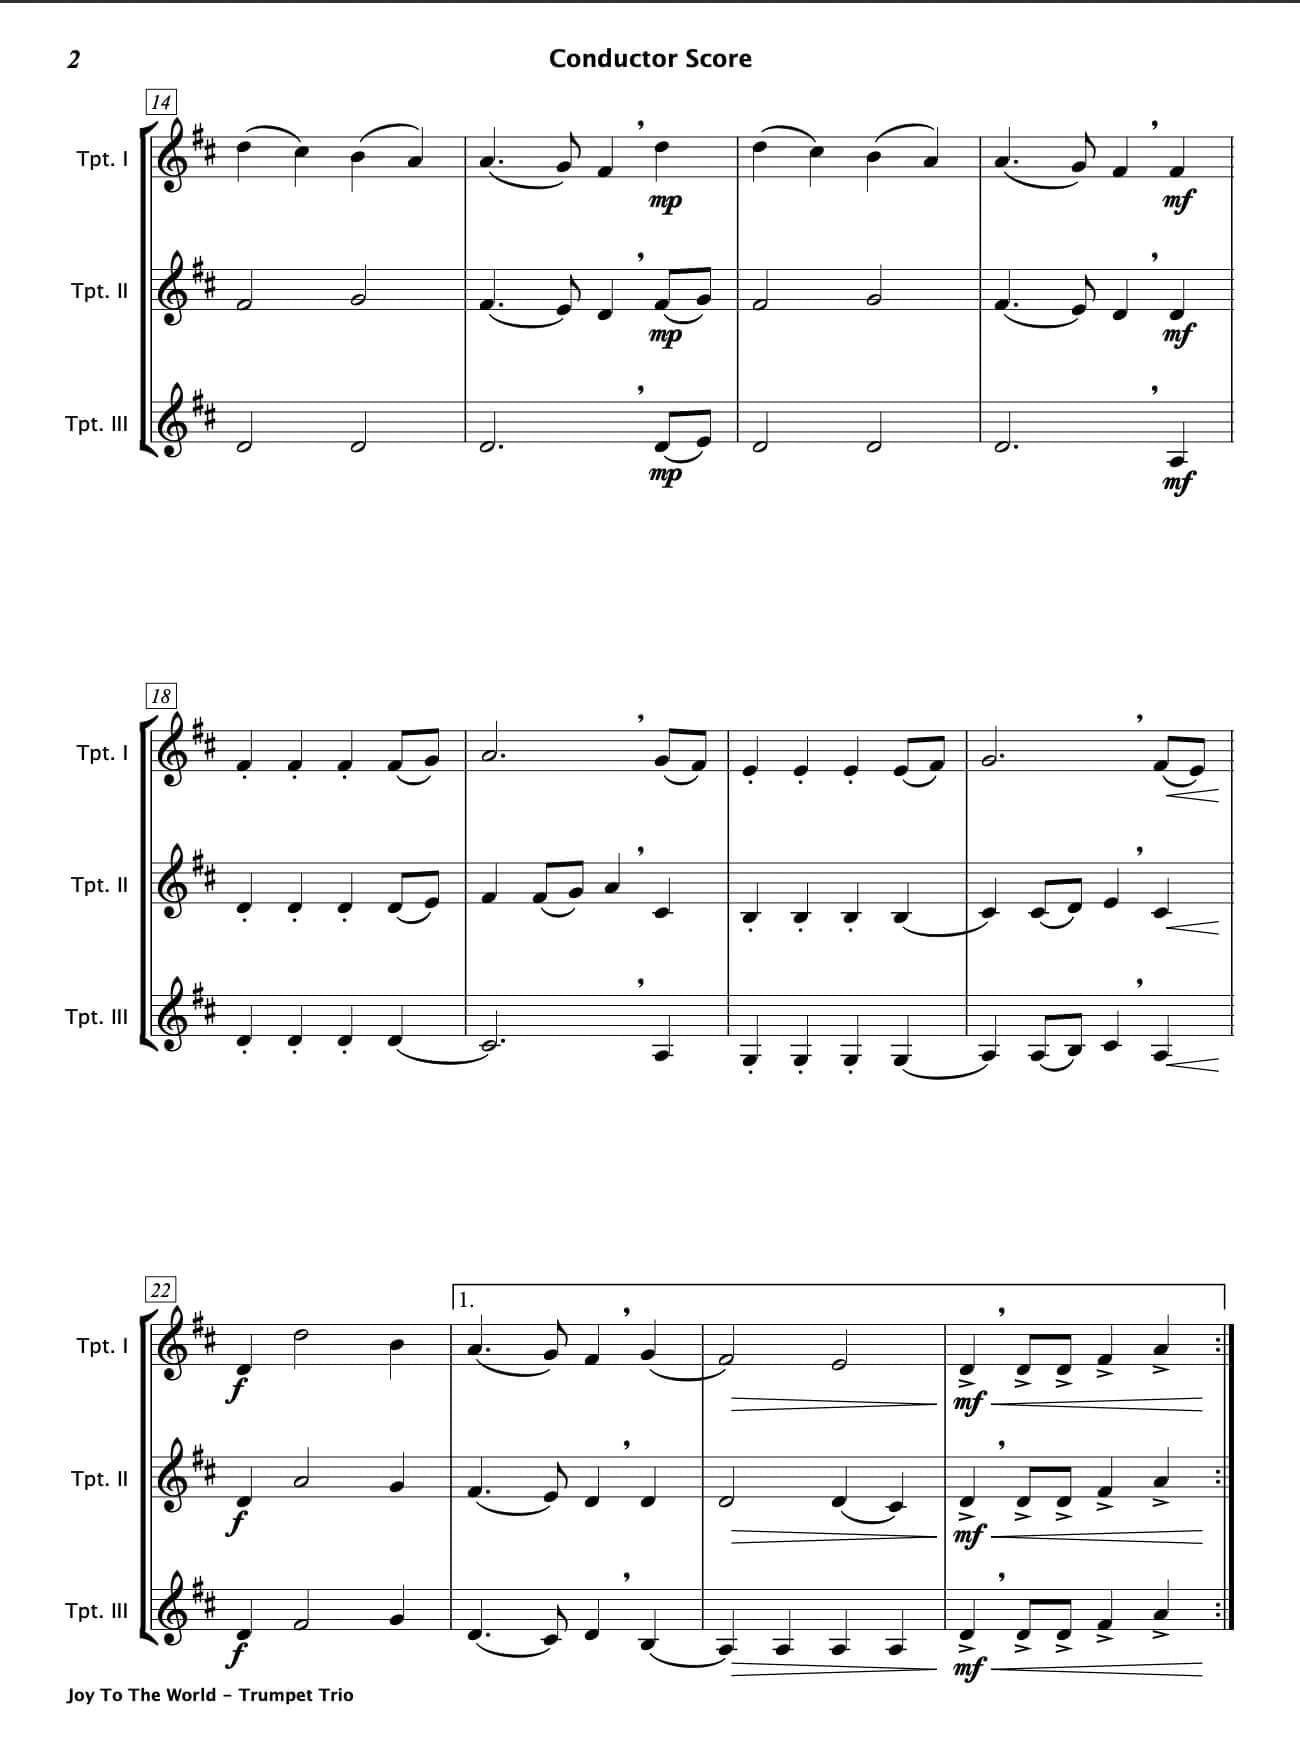 Christmas Trumpet Trios - Book 1 - Paul Barker Music 